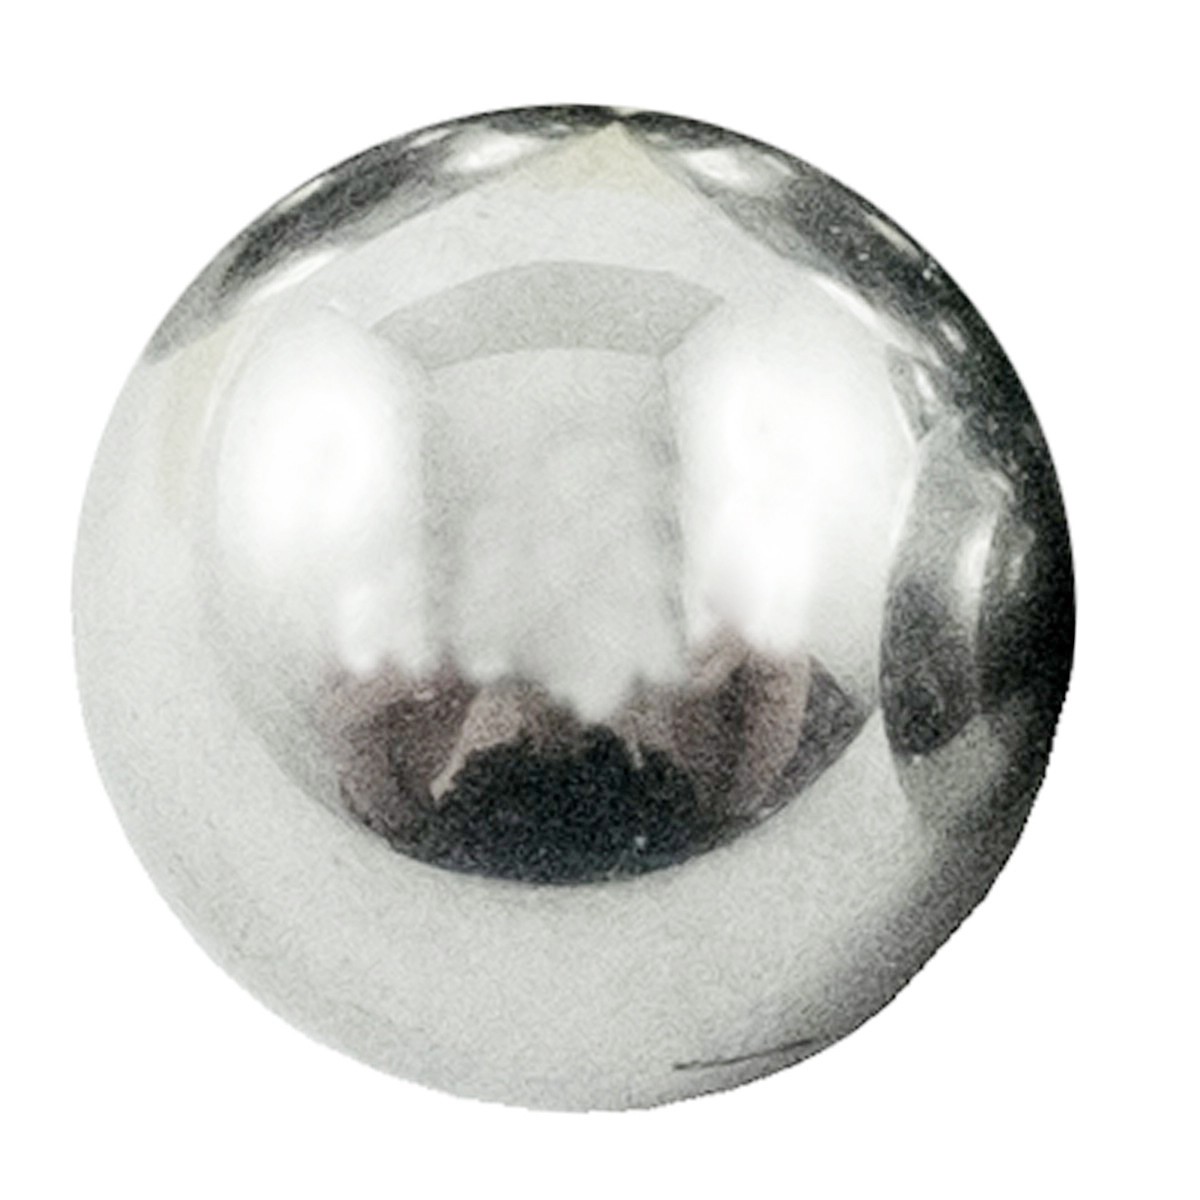 Shaft ball Ø 8 mm / Kubota B52 / Kubota Aste A-14 / 07715-01605